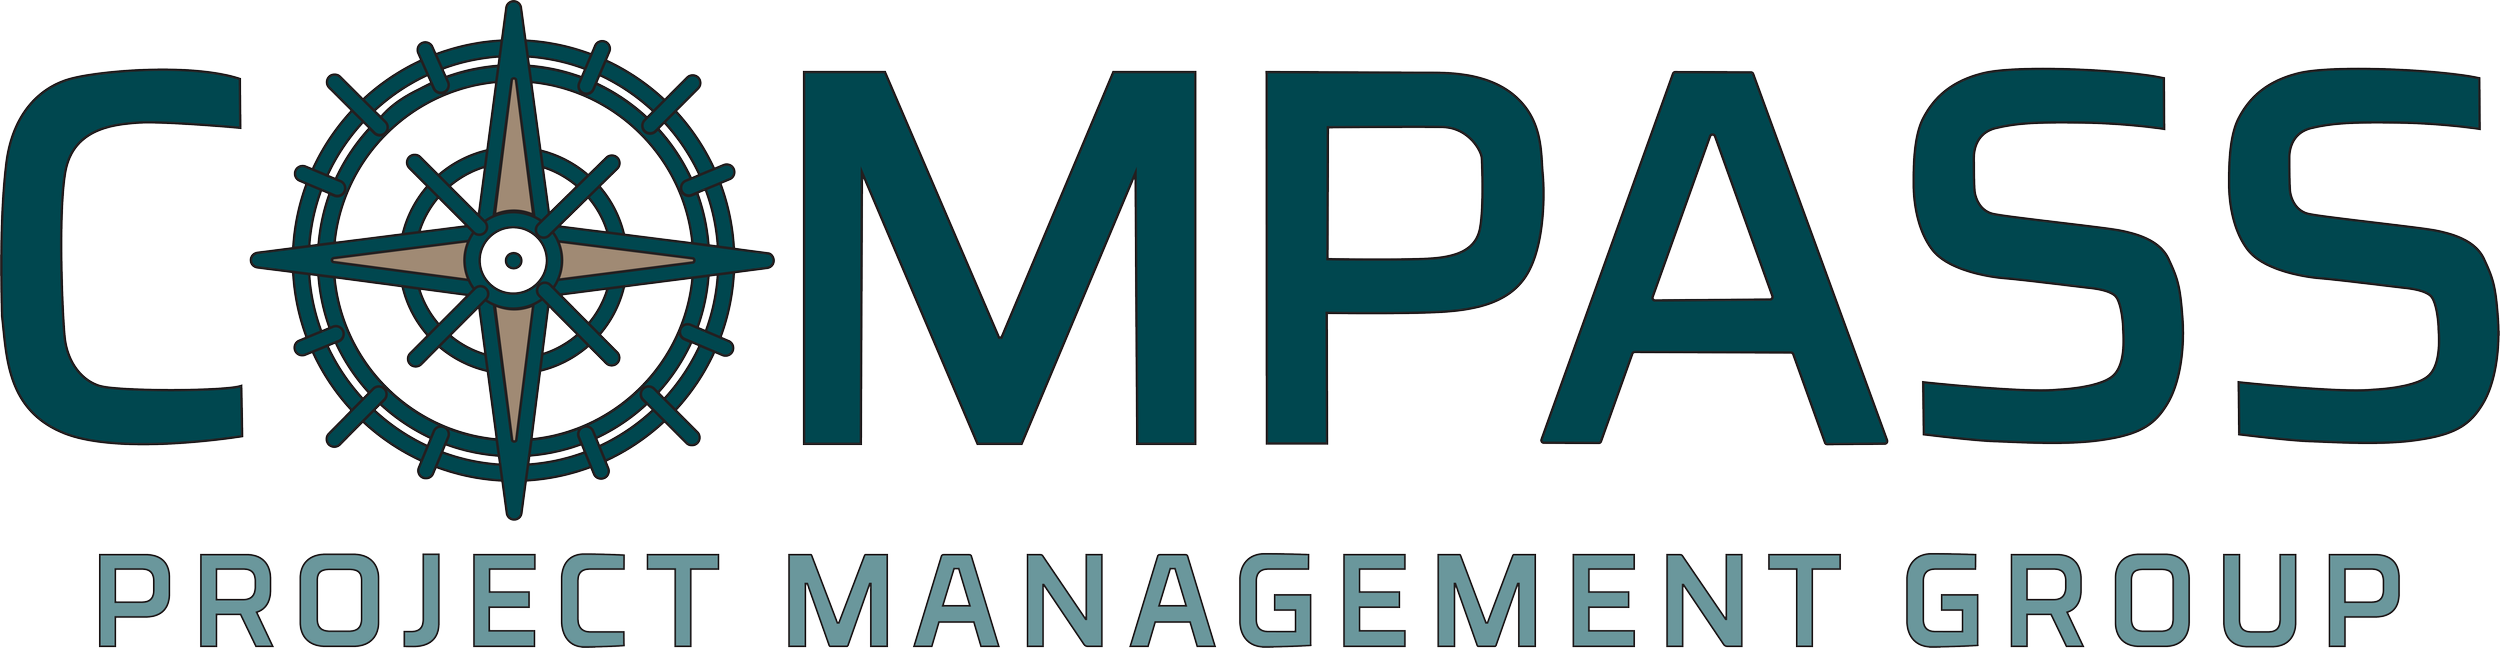 Compass Project Management Group